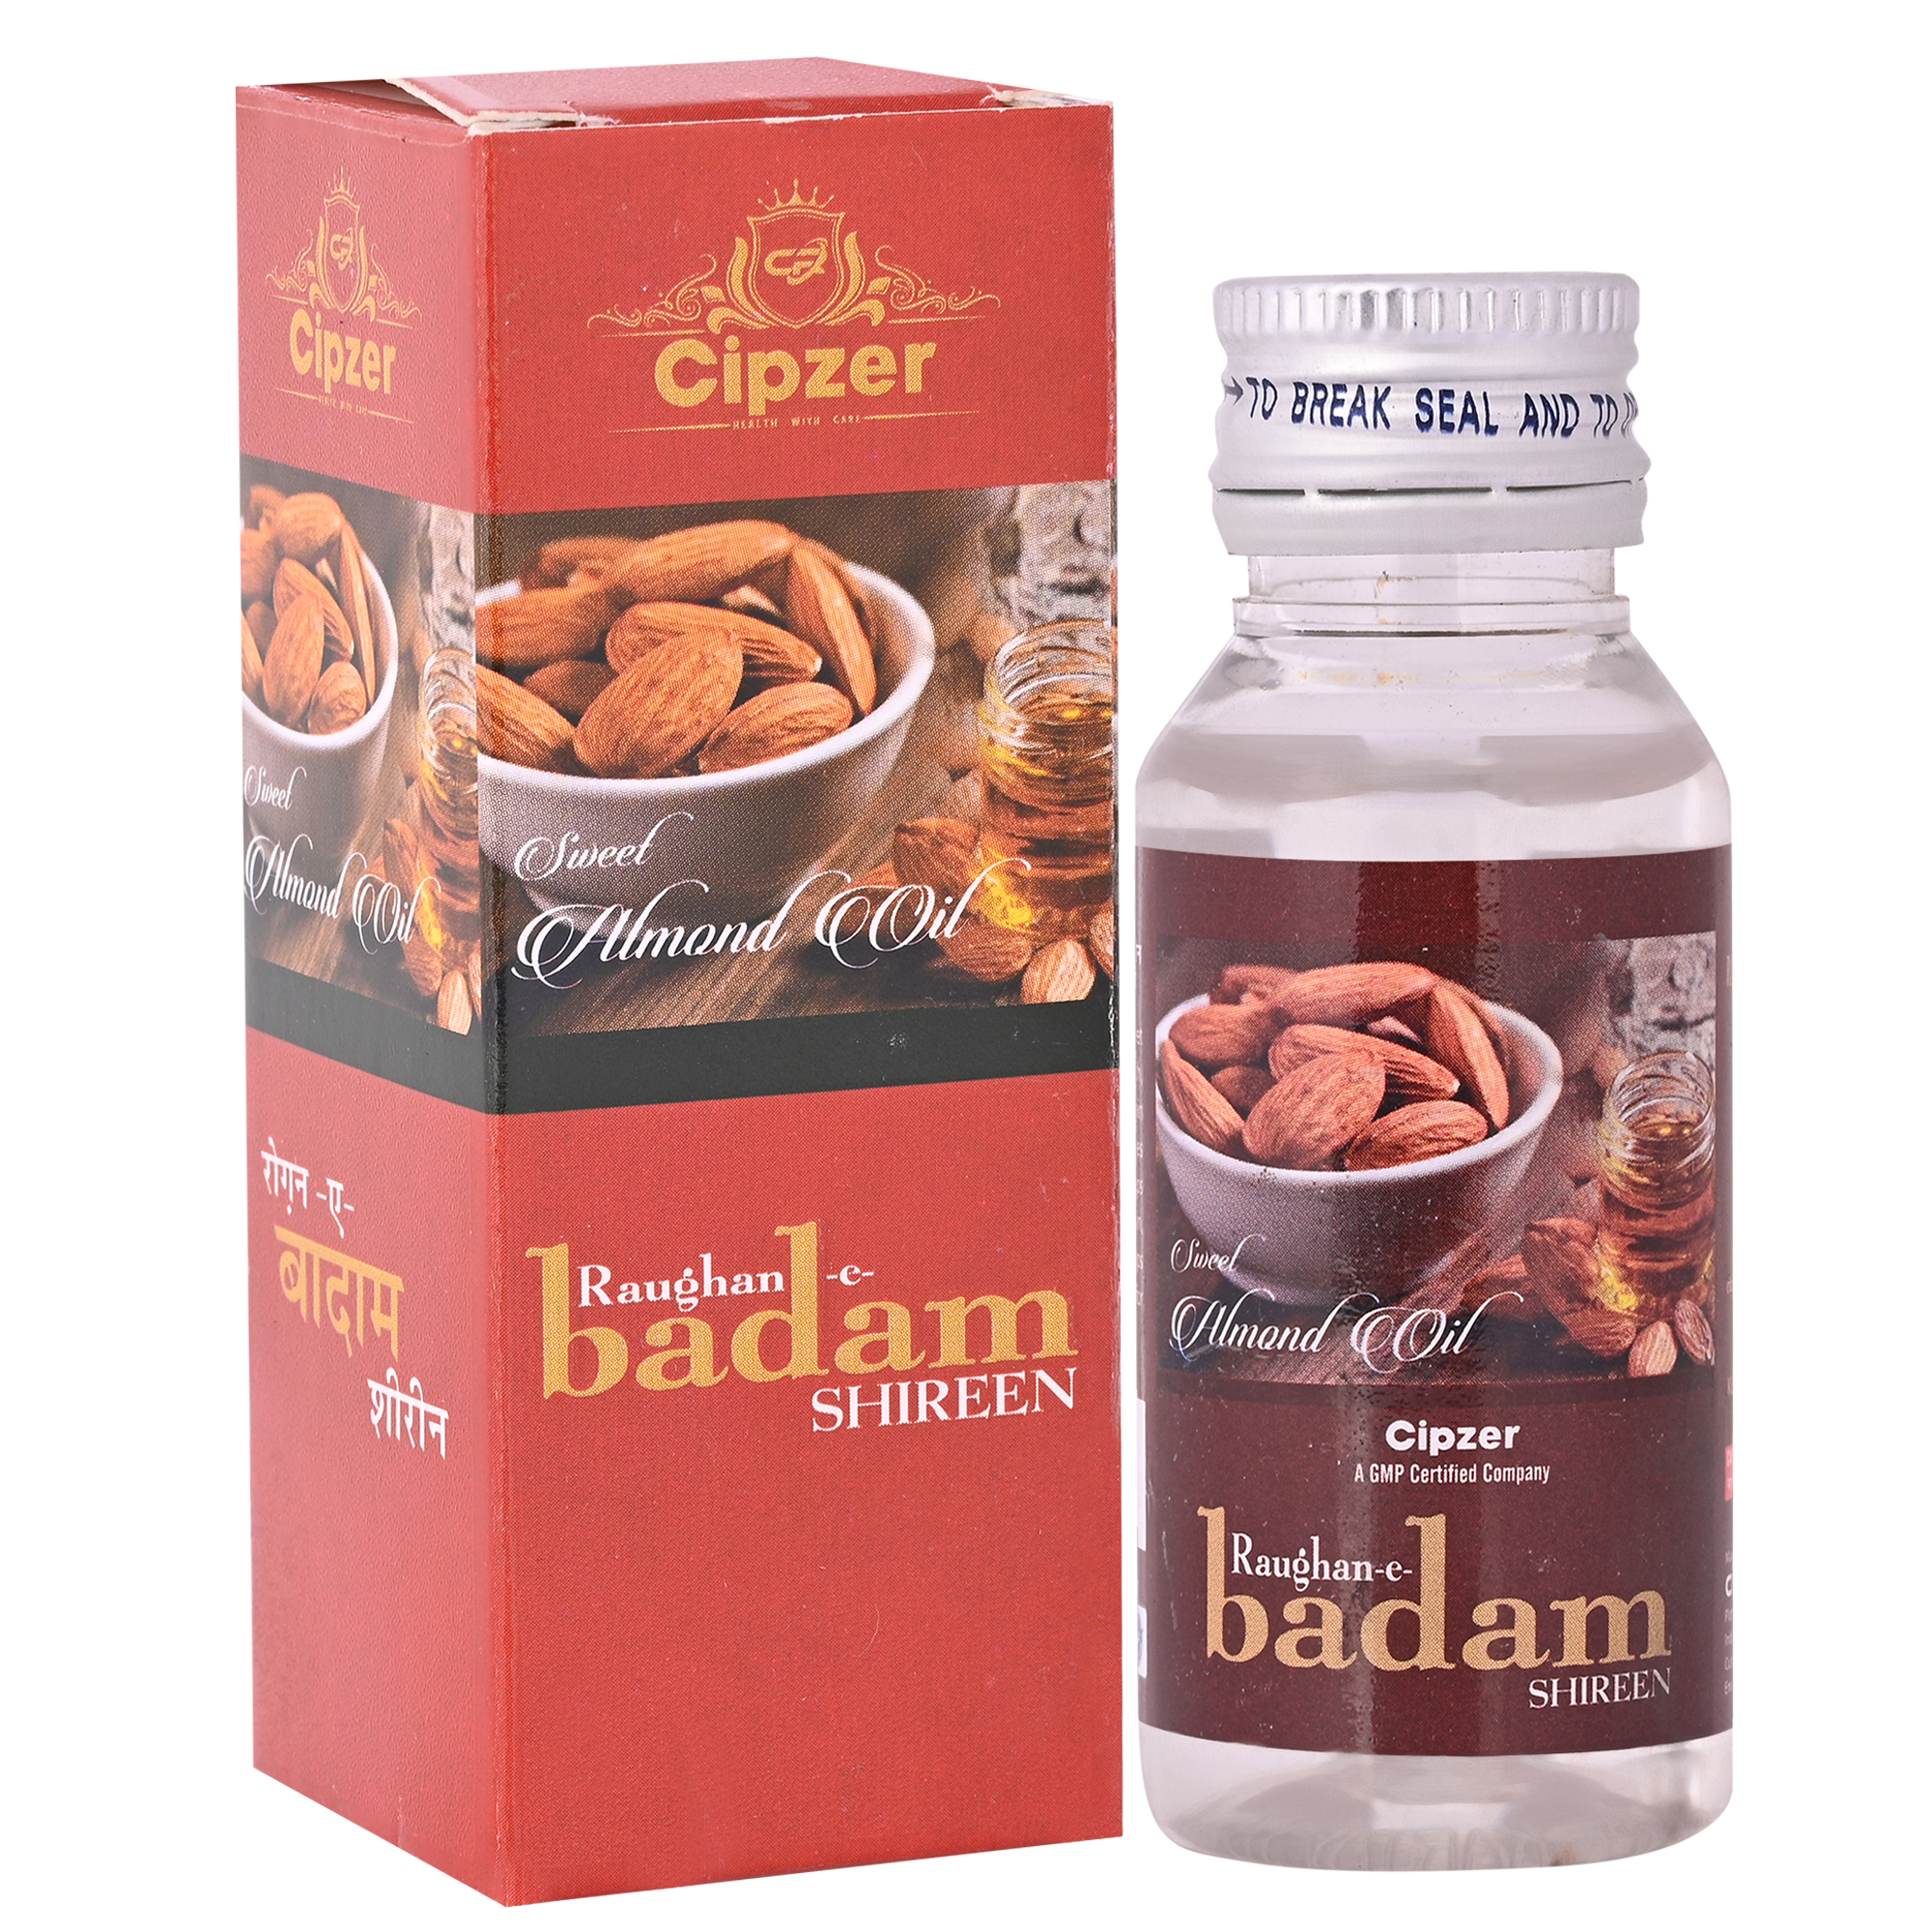 Buy Cipzer Roghan Badam Shirin at Best Price Online